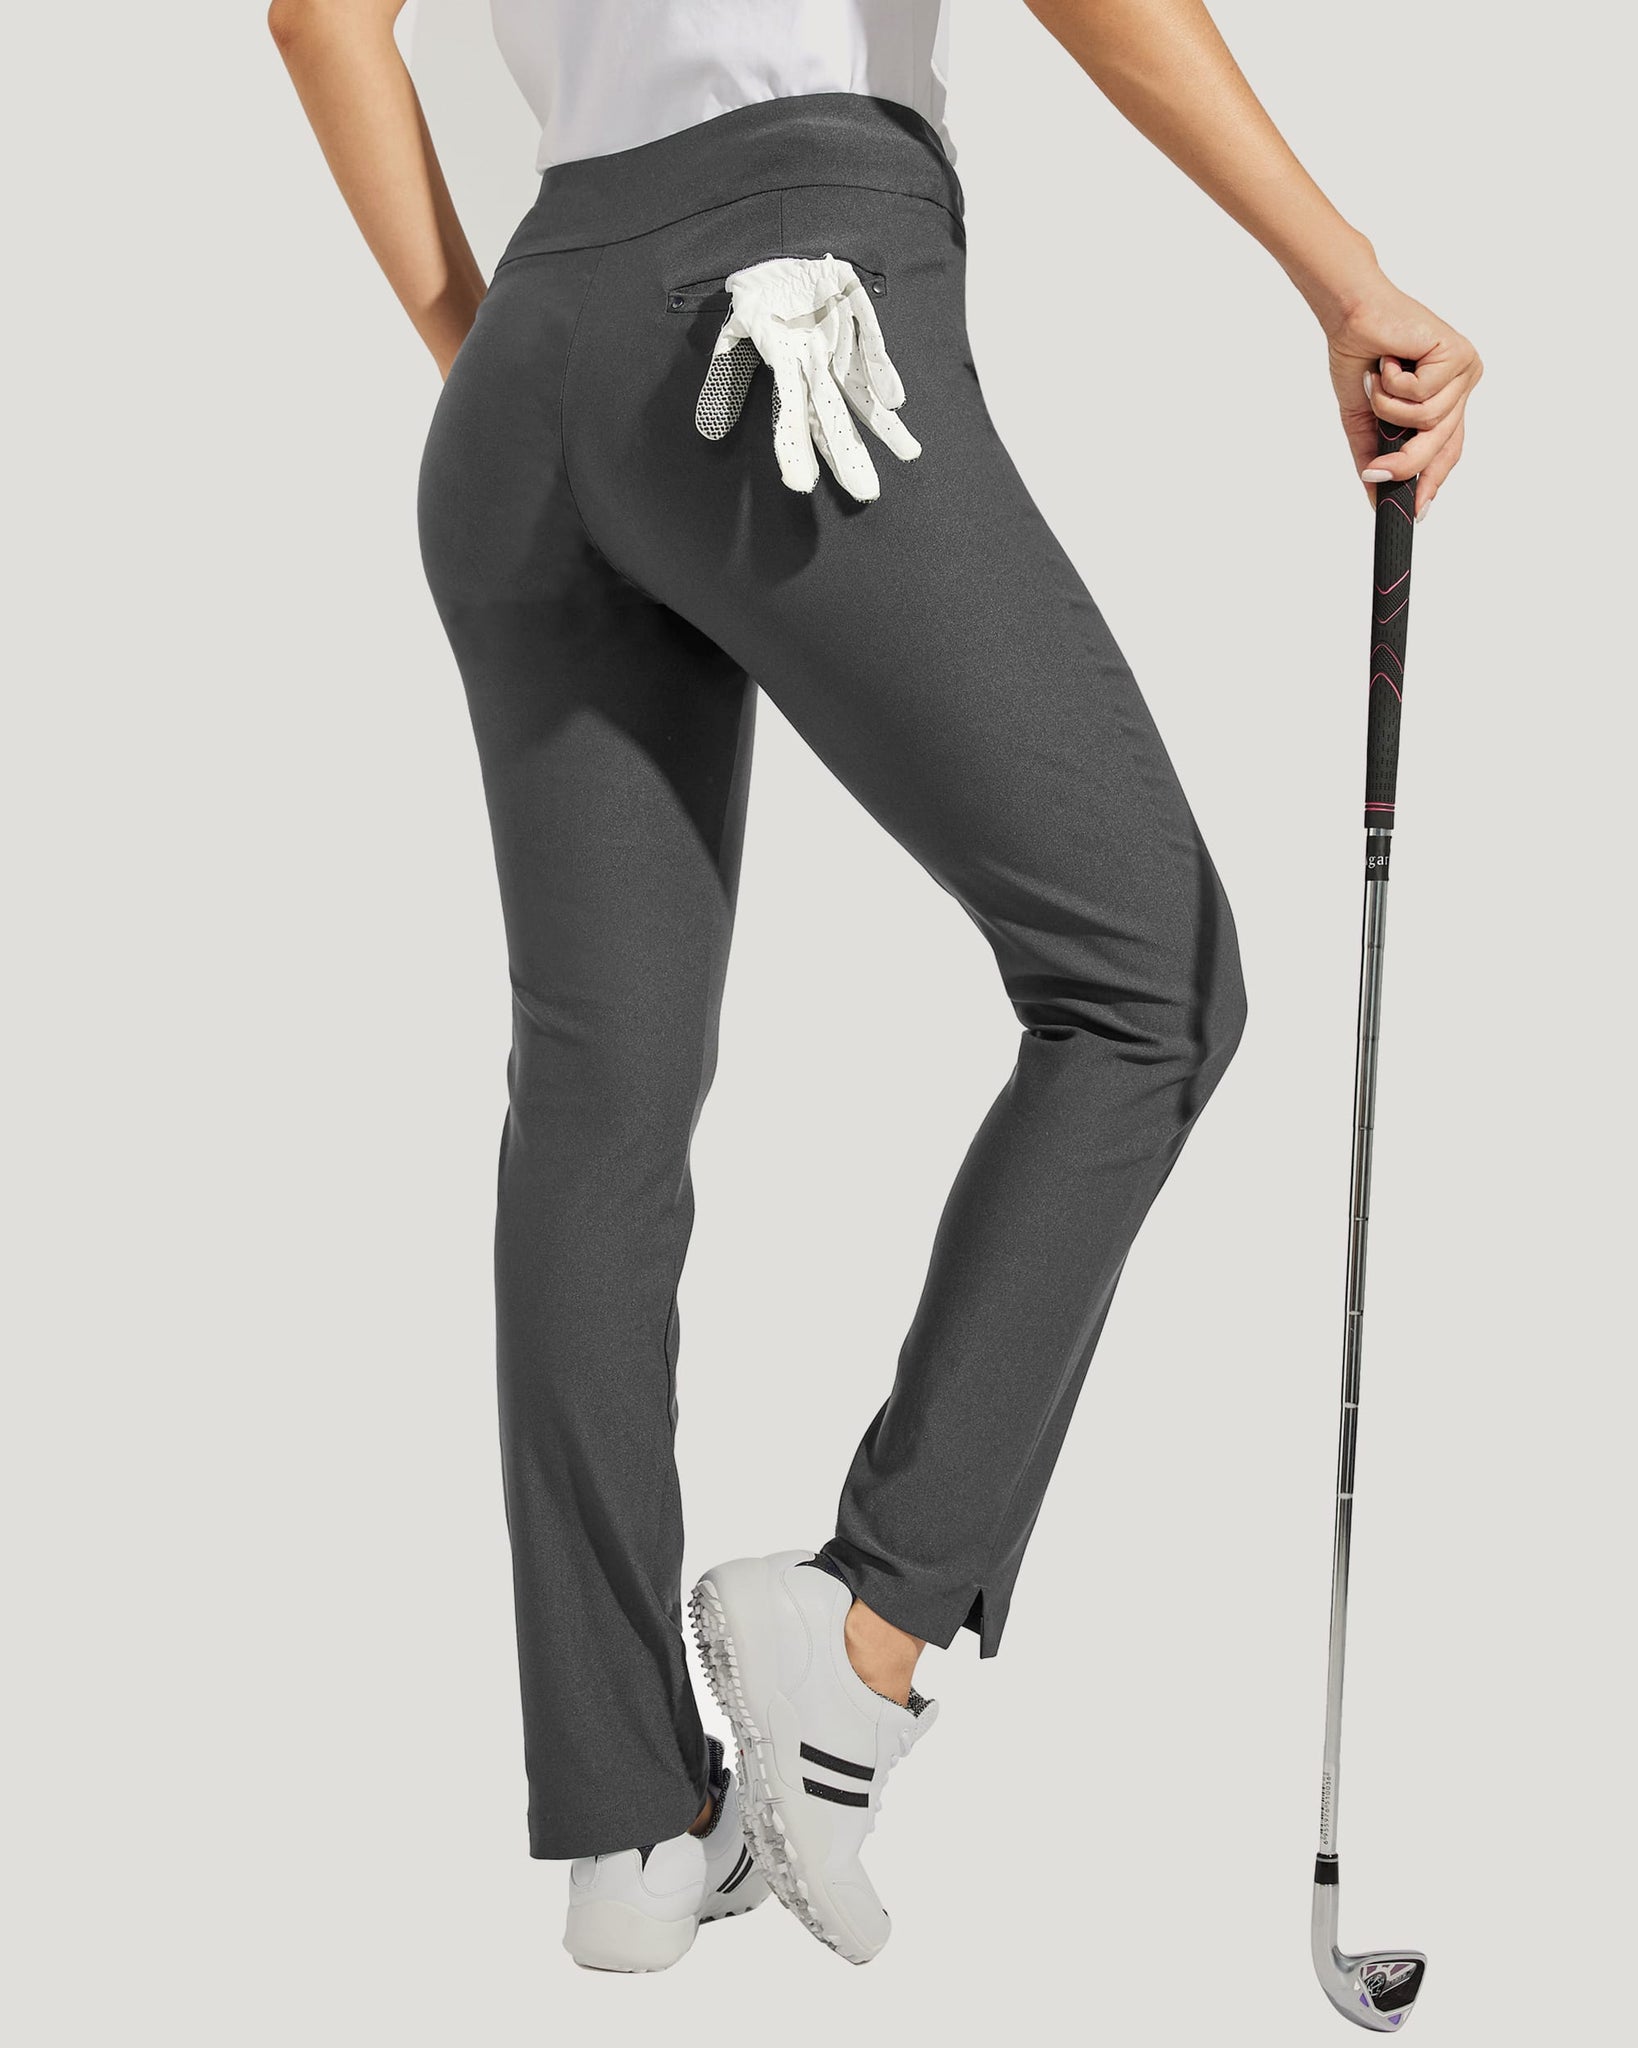 Women's Golf Pull-On Pants_DeepGray_model3